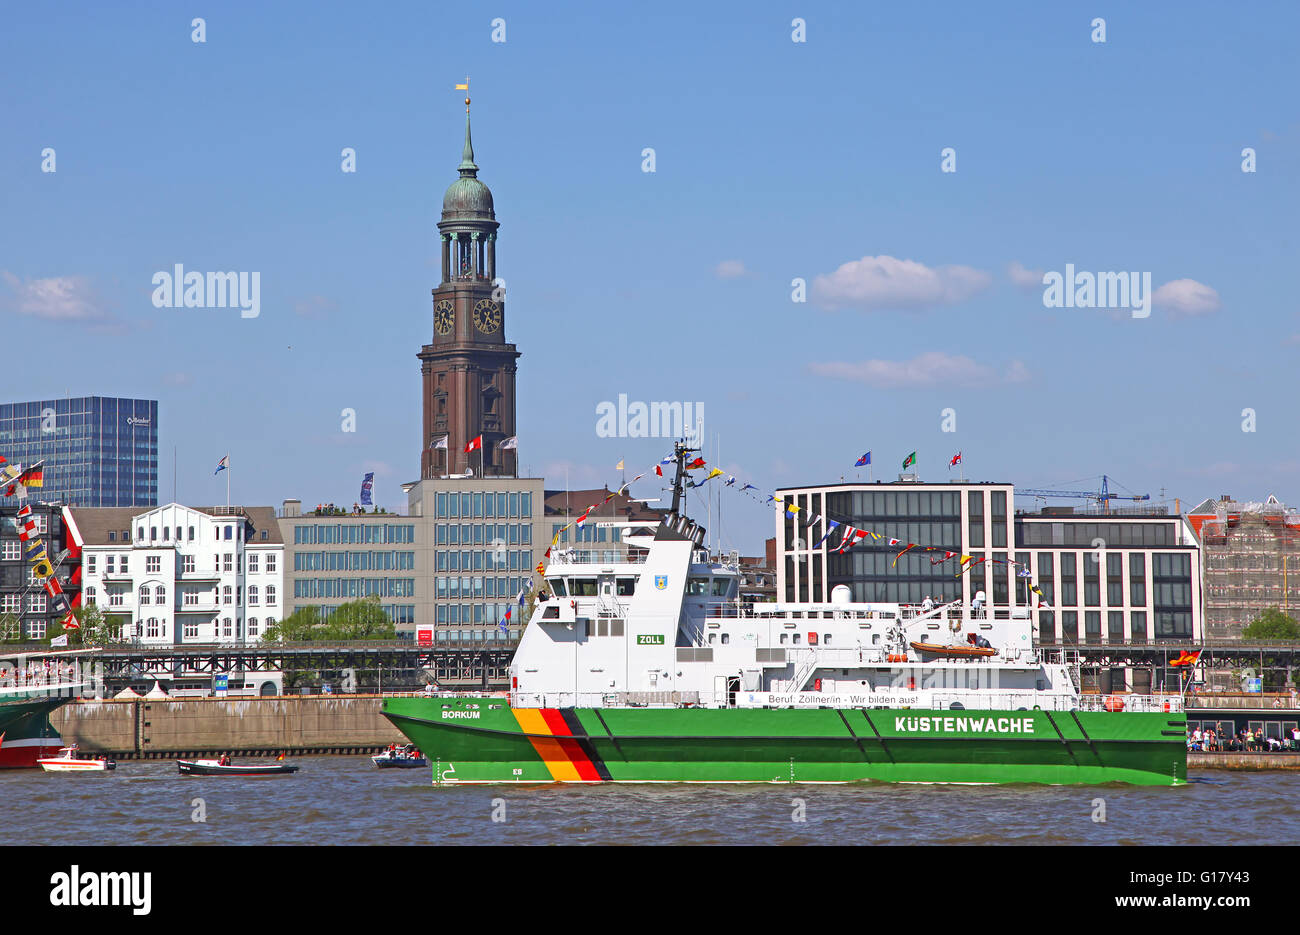 Küstenwache at the 827th Birthday of the Port of Hamburg, 2016 Stock Photo